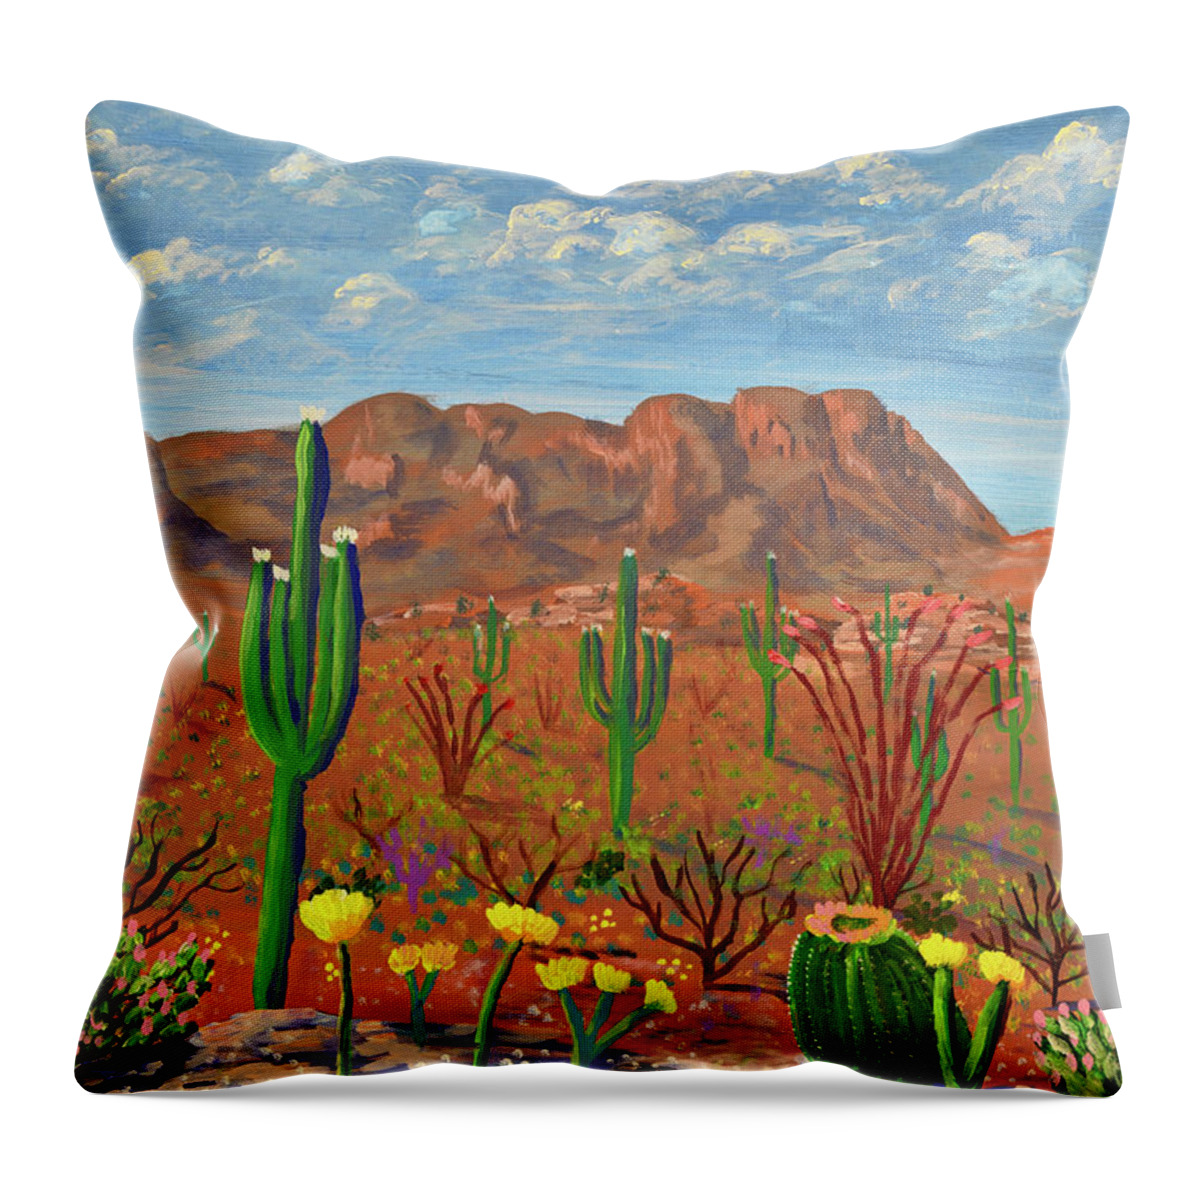 Arizona Throw Pillow featuring the painting Arizona Spring by Chance Kafka